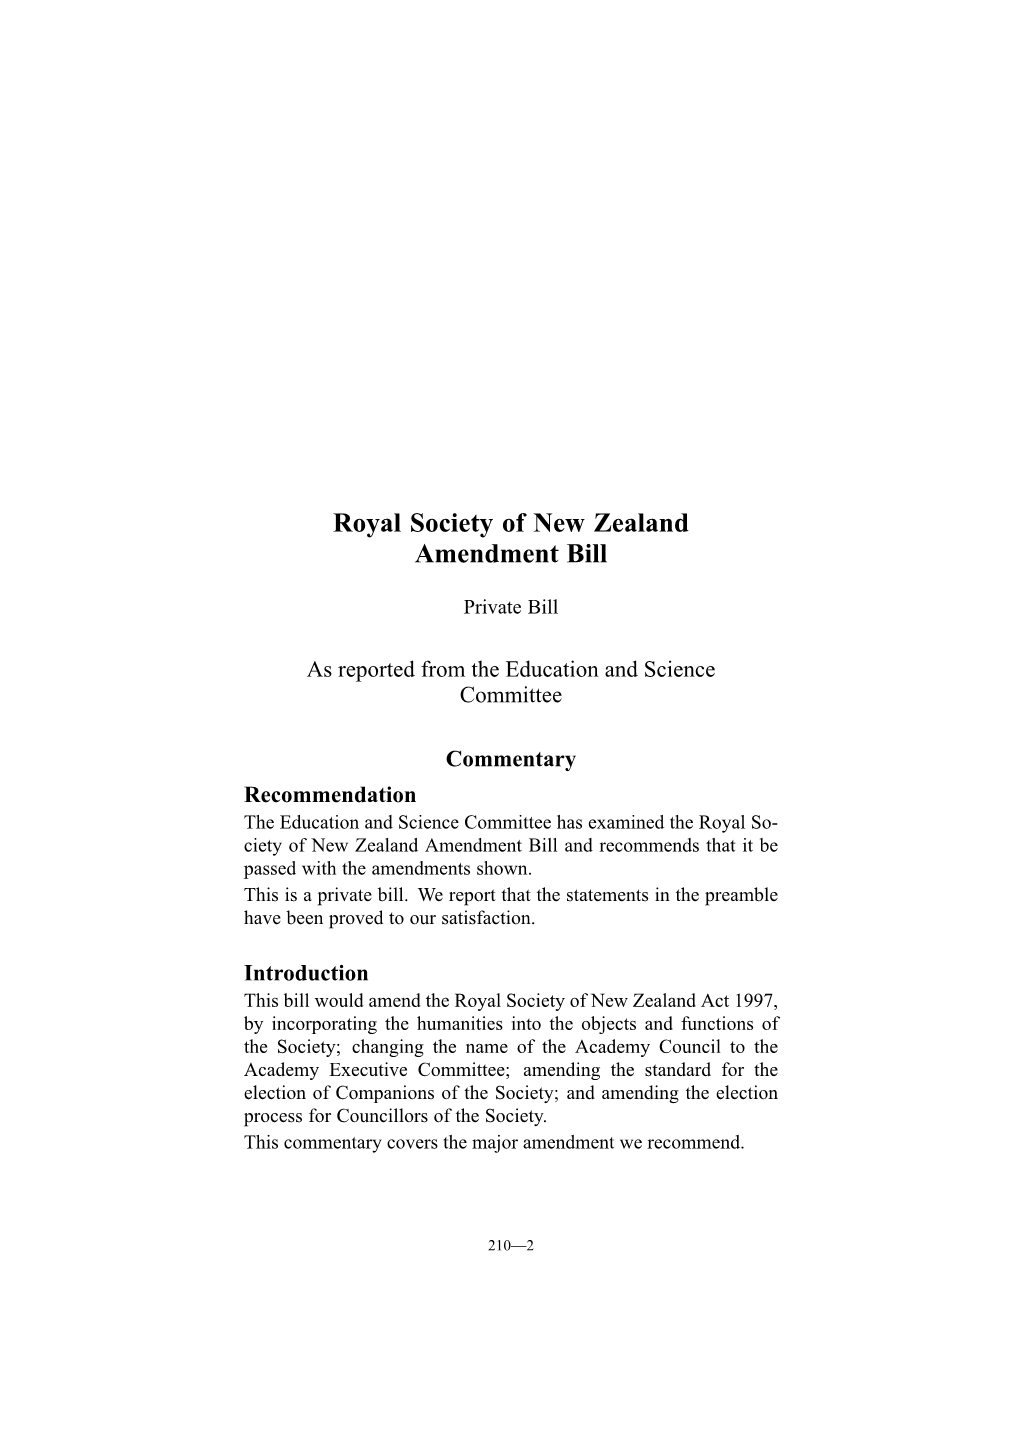 Royal Society of New Zealand Amendment Bill